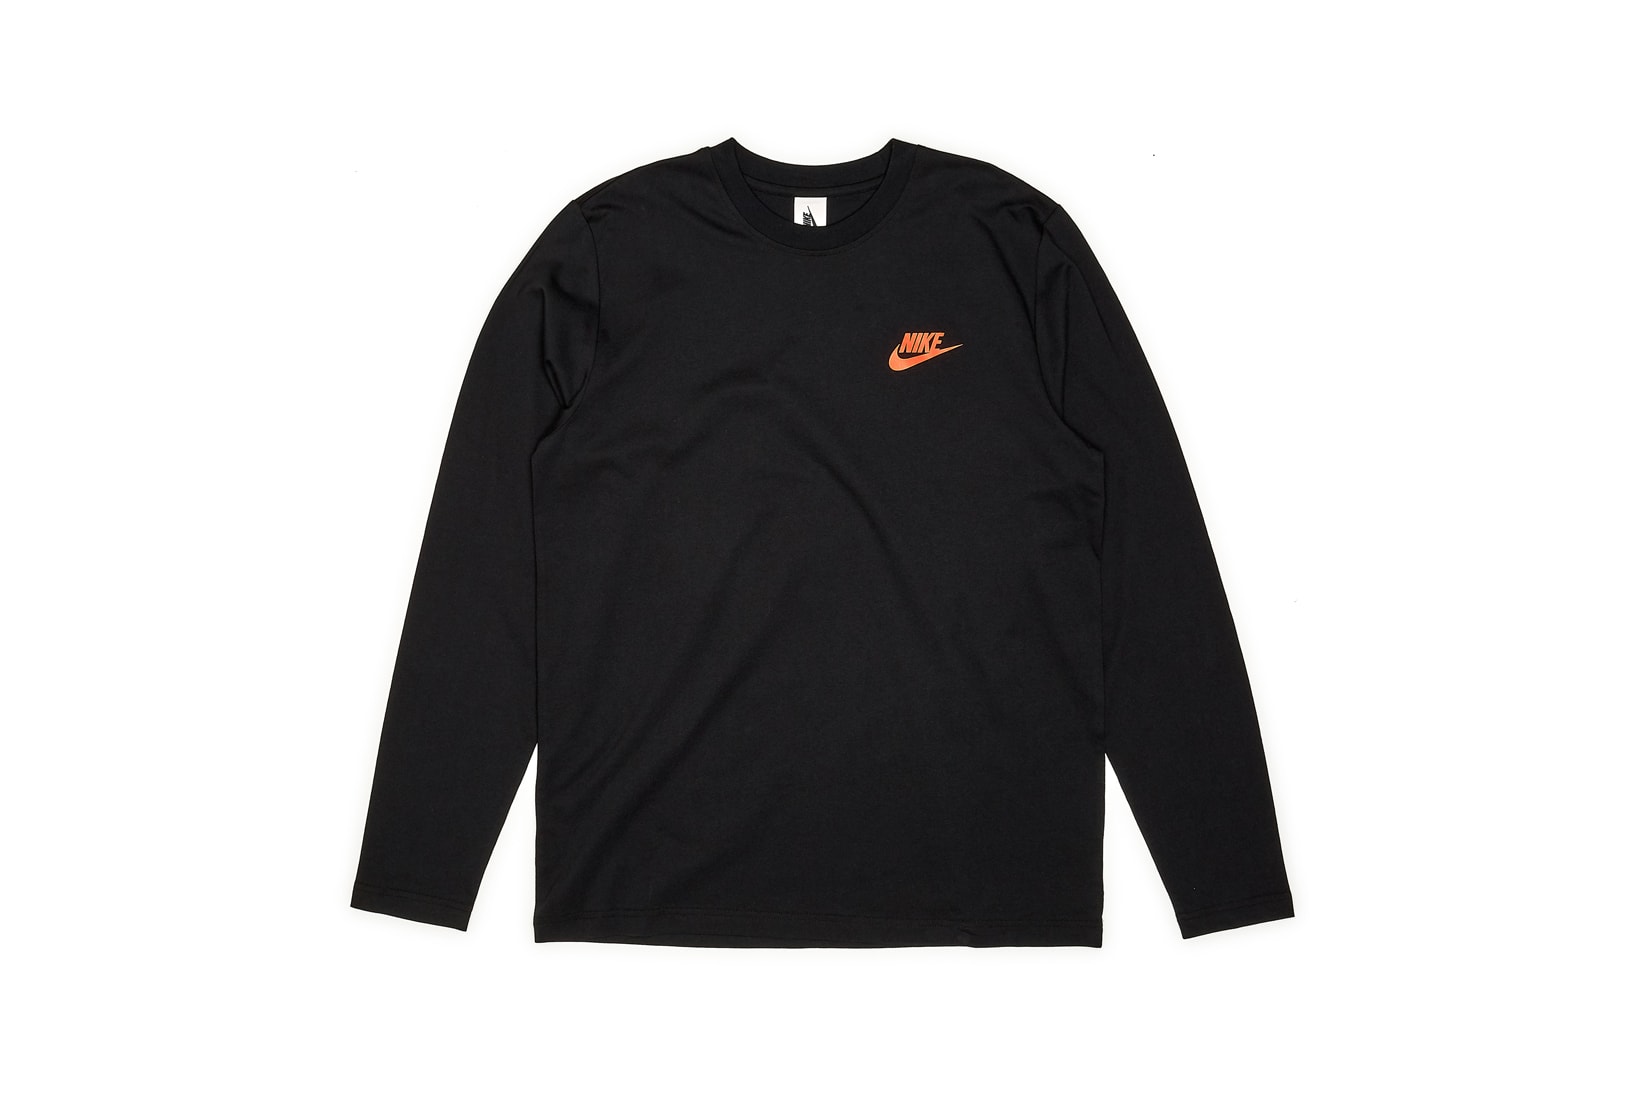 Nike x Dover Street Market Just Do It Long Sleeve T-shirt Black